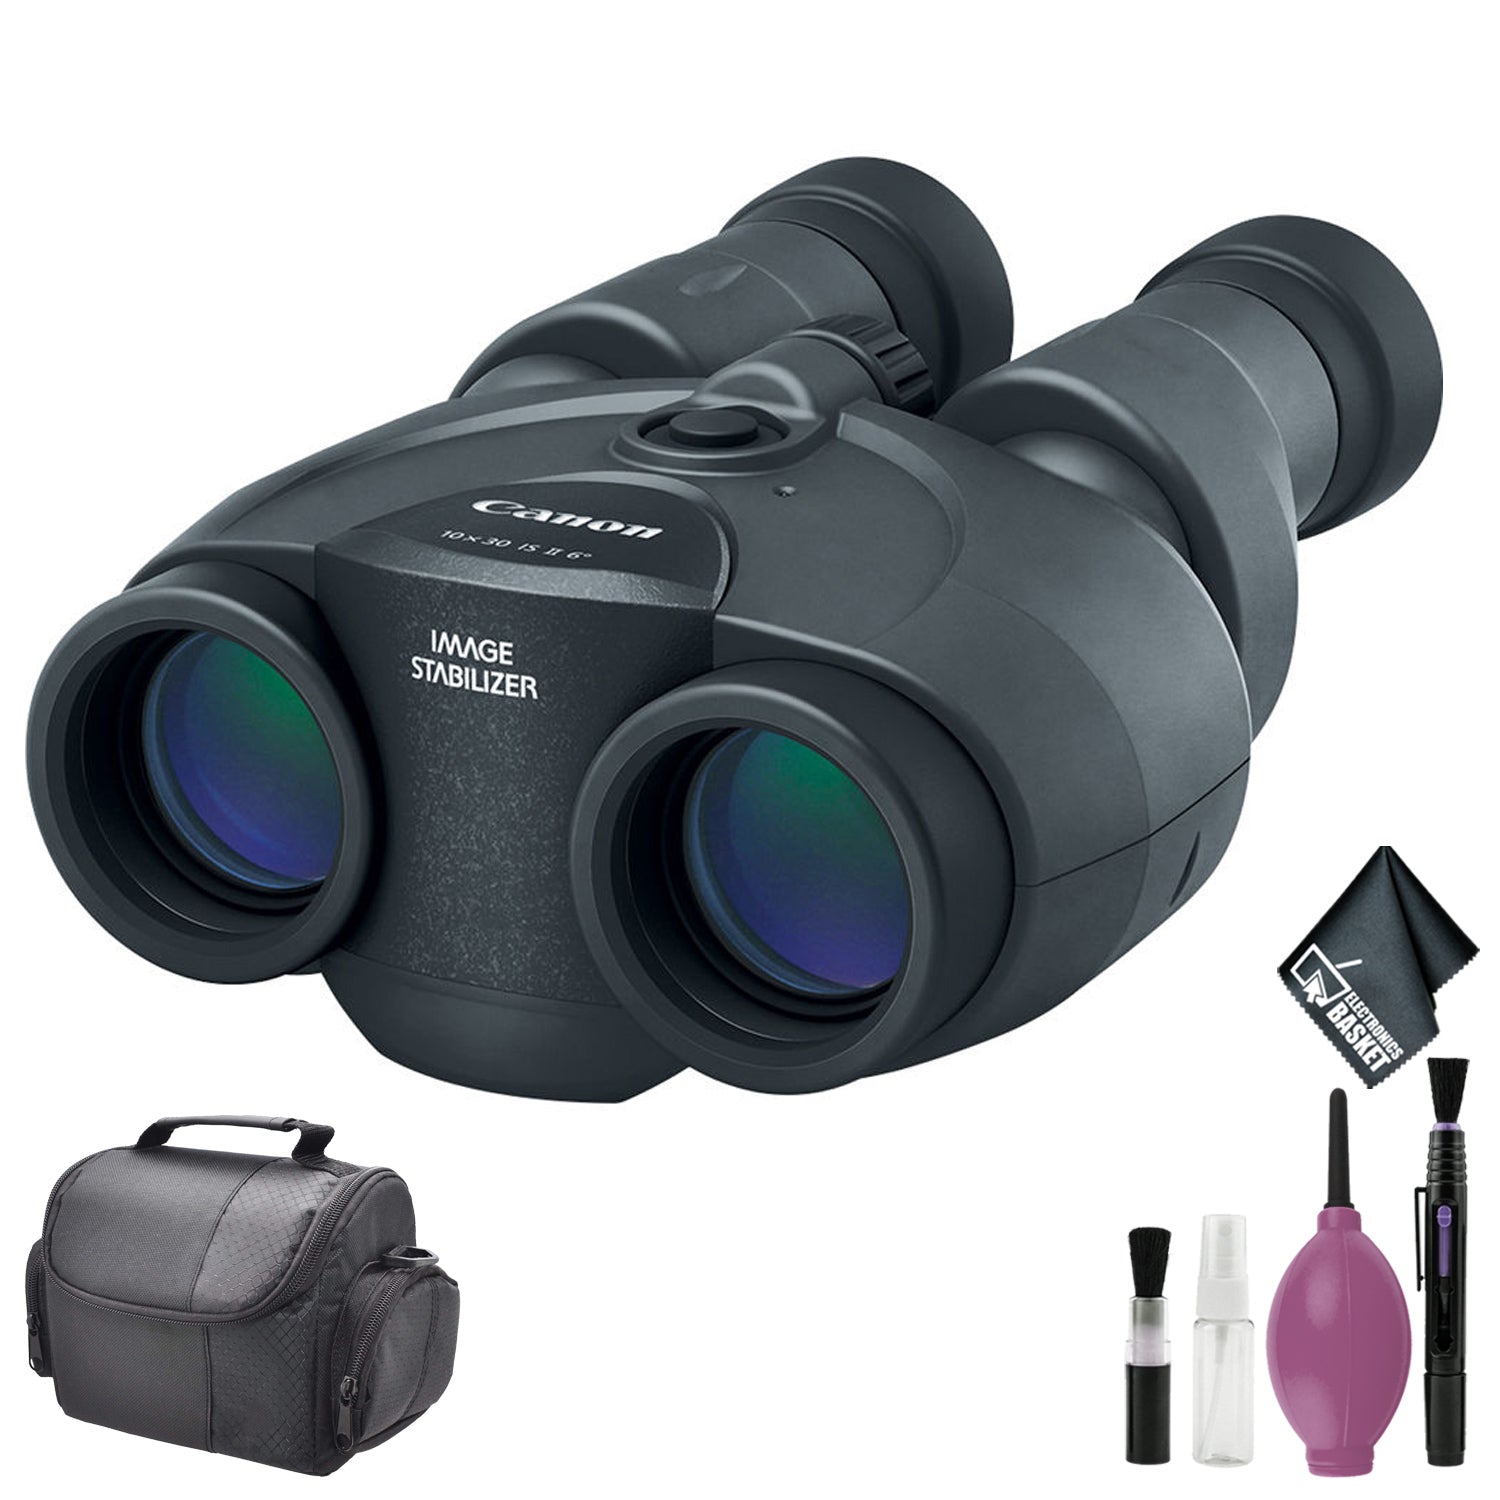 Canon 10x30 IS II Image Stabilized Binocular - Cleaning Kit - SOFT CASE-MED (SLR + LENSES)